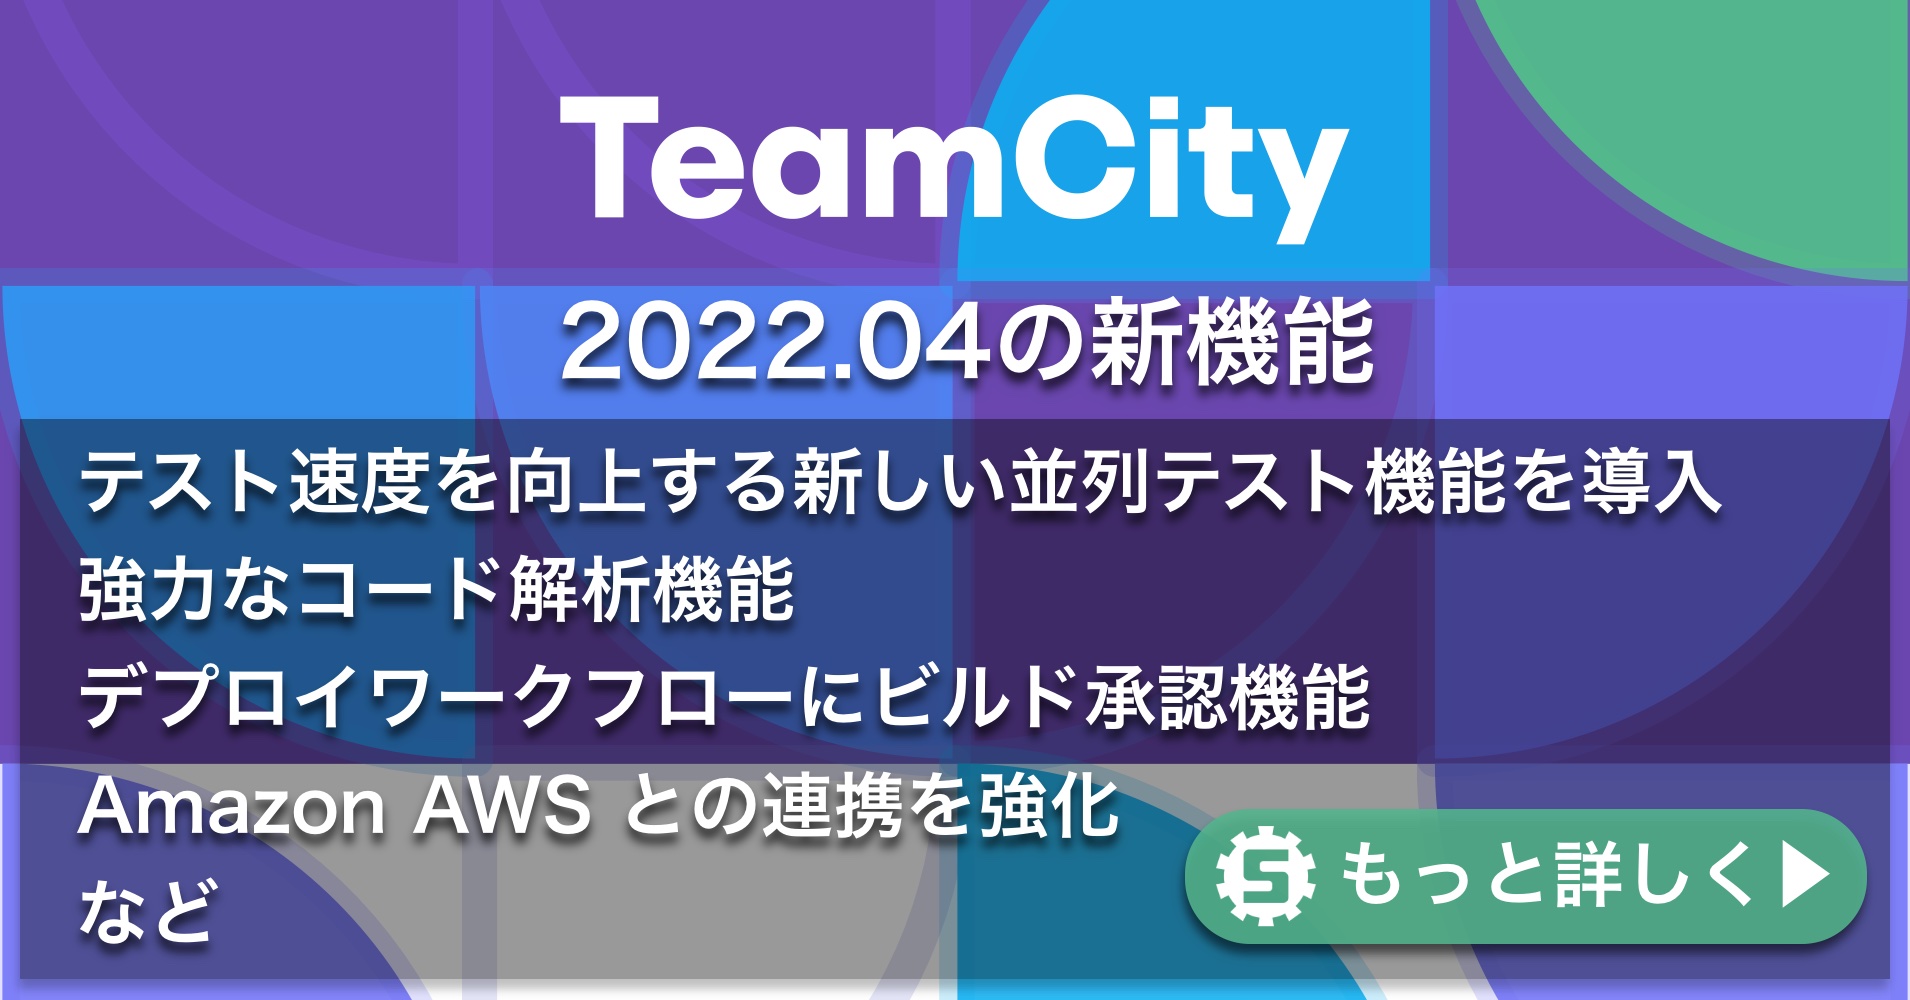 TeamCity 2022.04の新機能